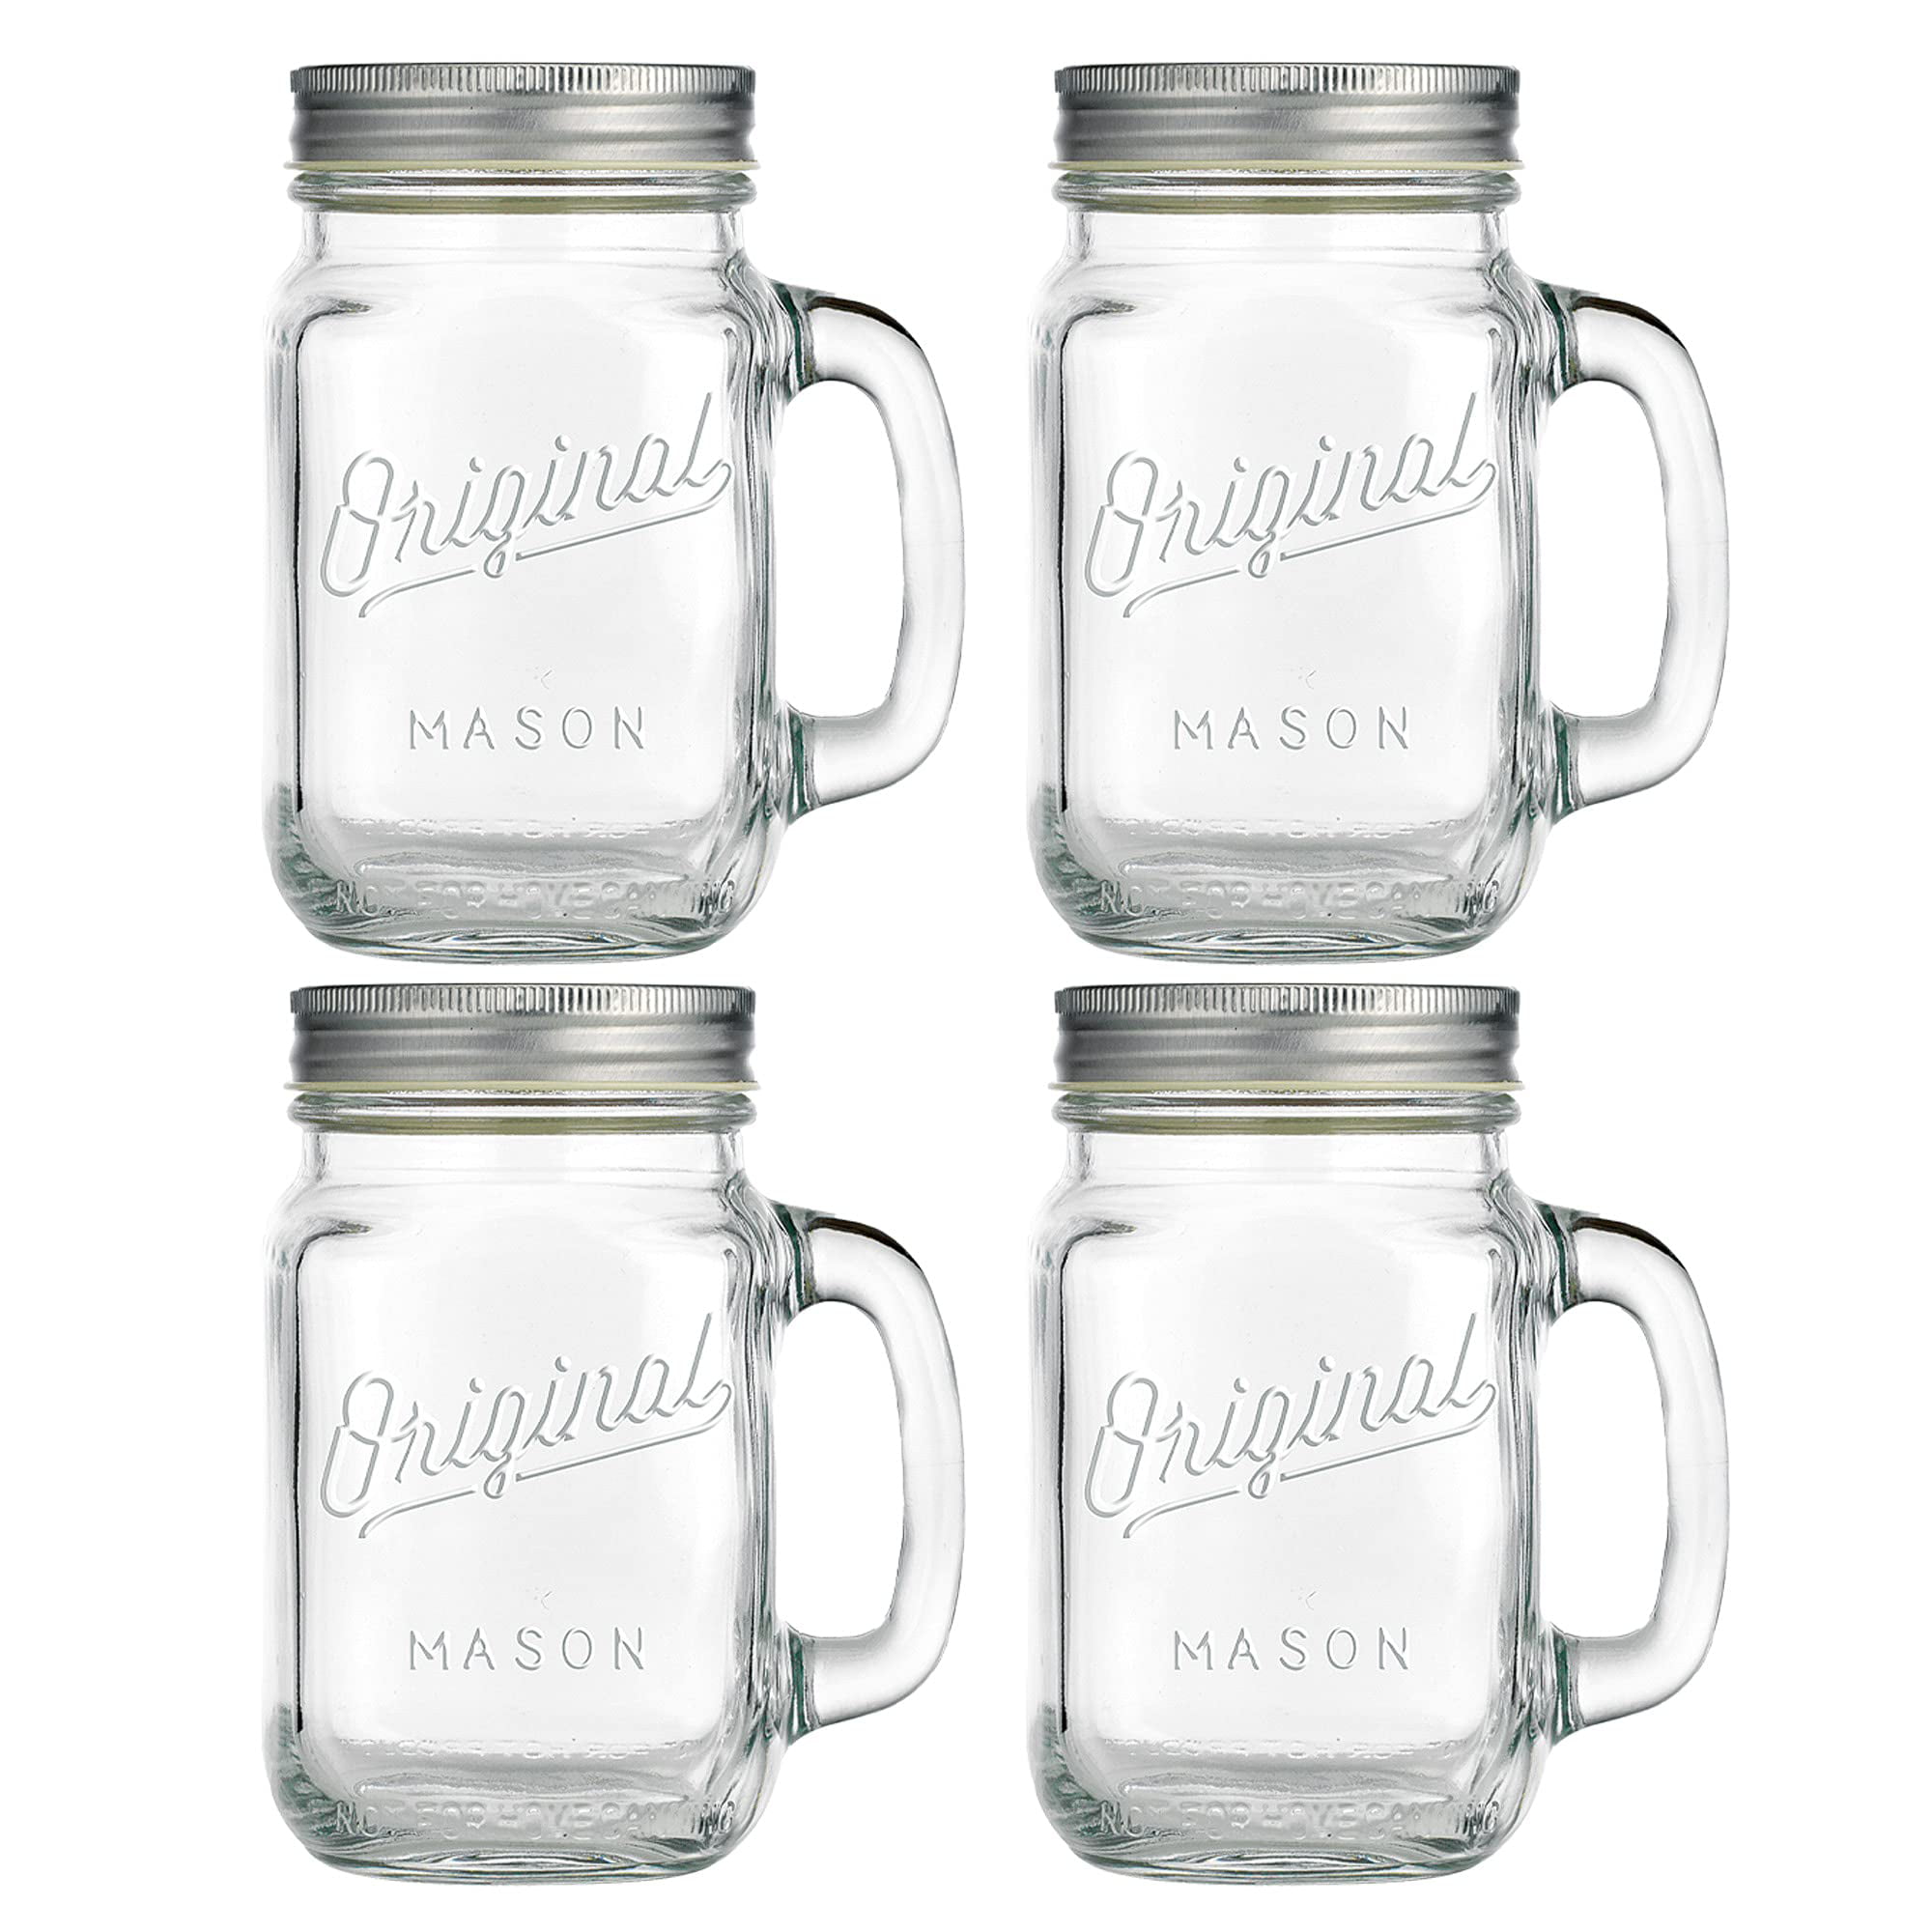 Glaver's Mason Jar 16 oz. Glass Mugs with Handle and Lid Set of 6 Old Fashioned Drinking Glass Bottles Original Mason Jar Pint Sized Cup Set.